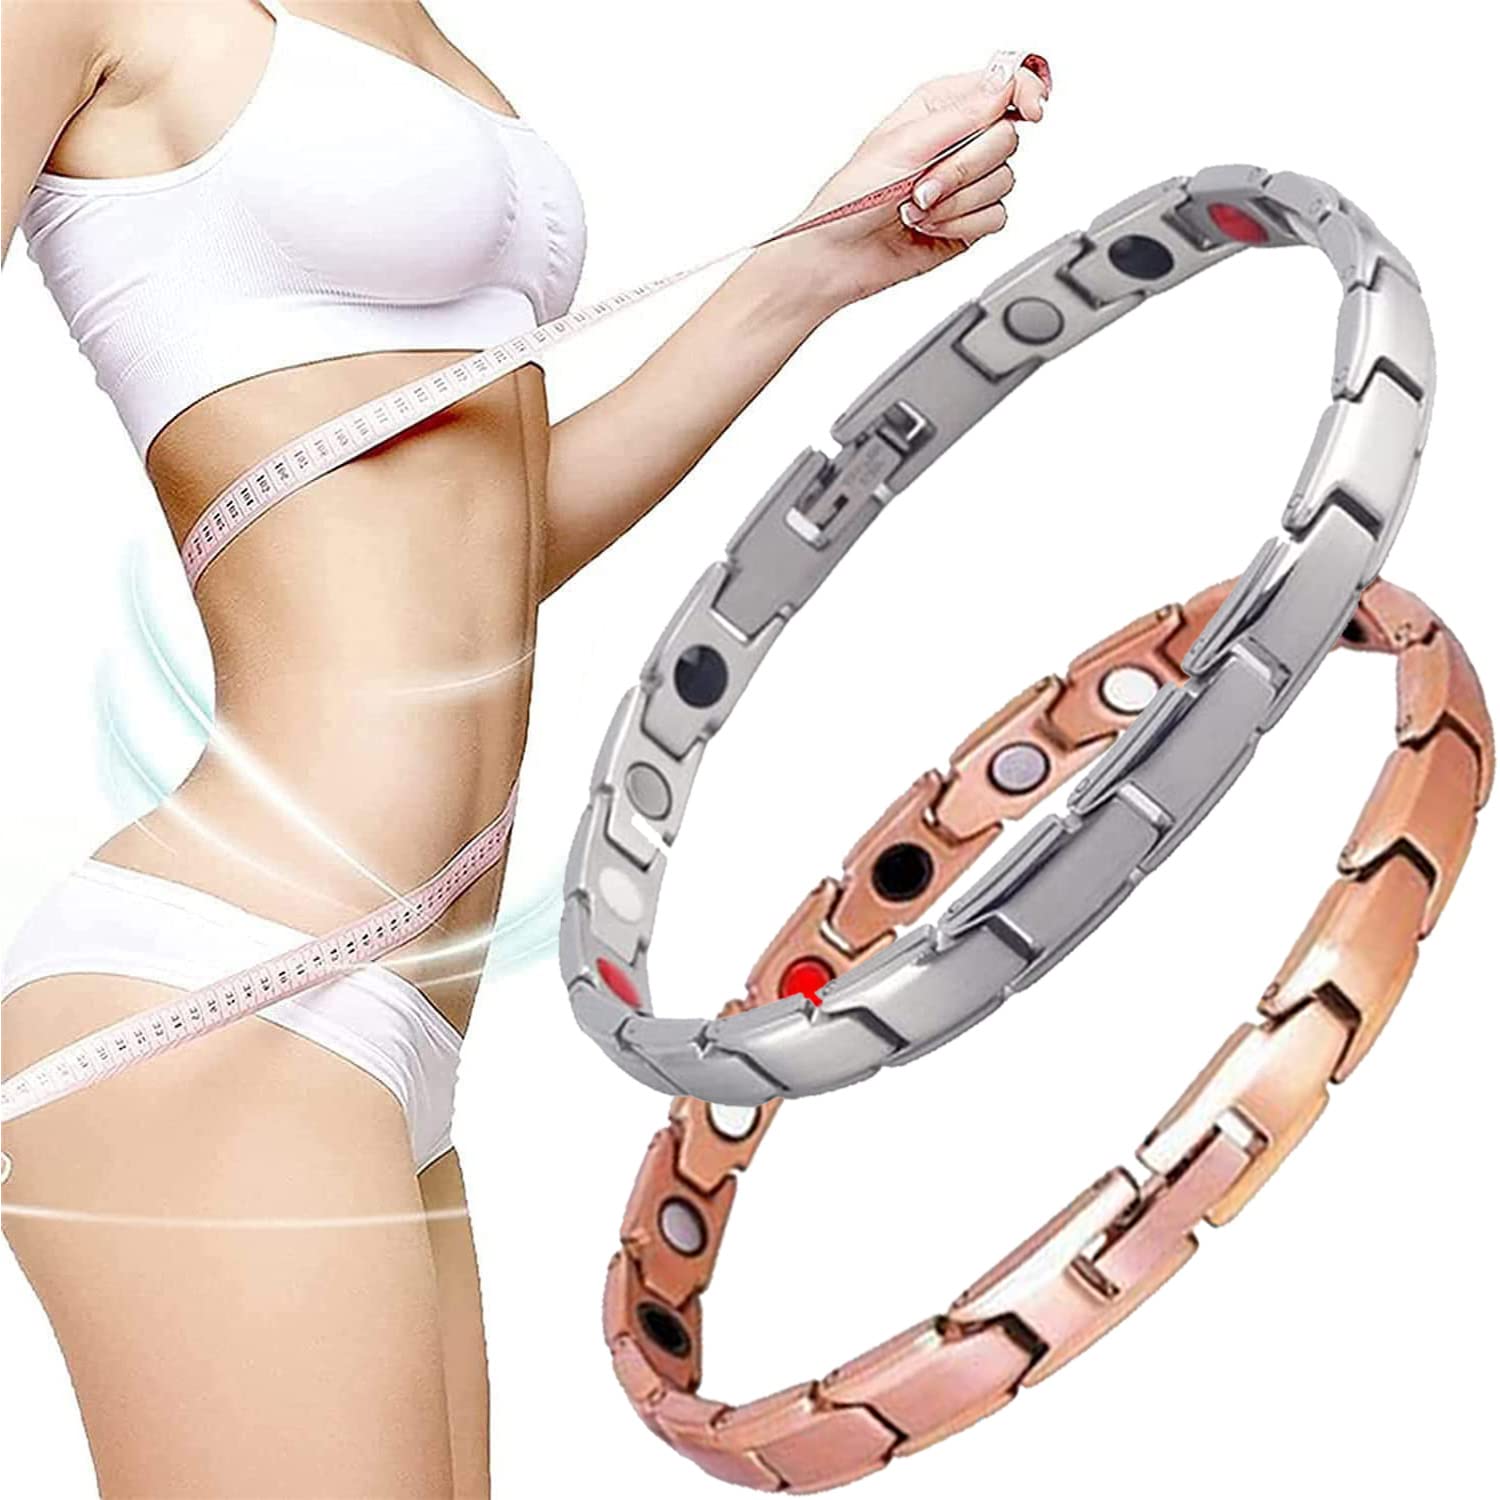 Magnetic Lymph Detox Bracelet, Magnetic Bracelets for Women, Lymph